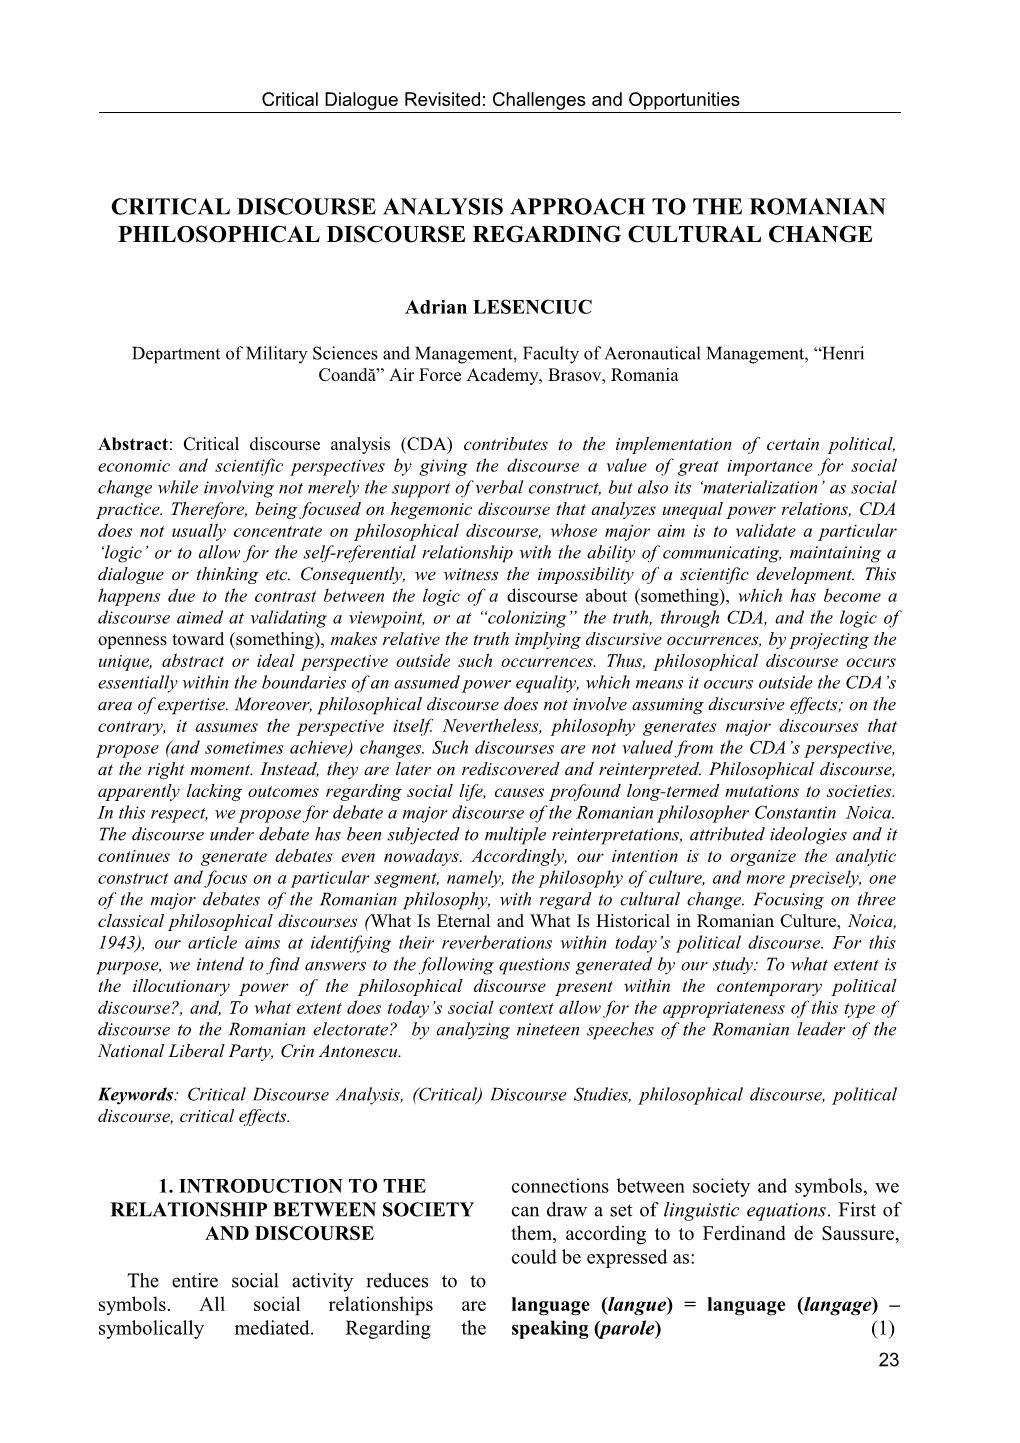 Critical Discourse Analysis Approach to the Romanian Philosophical Discourse Regarding